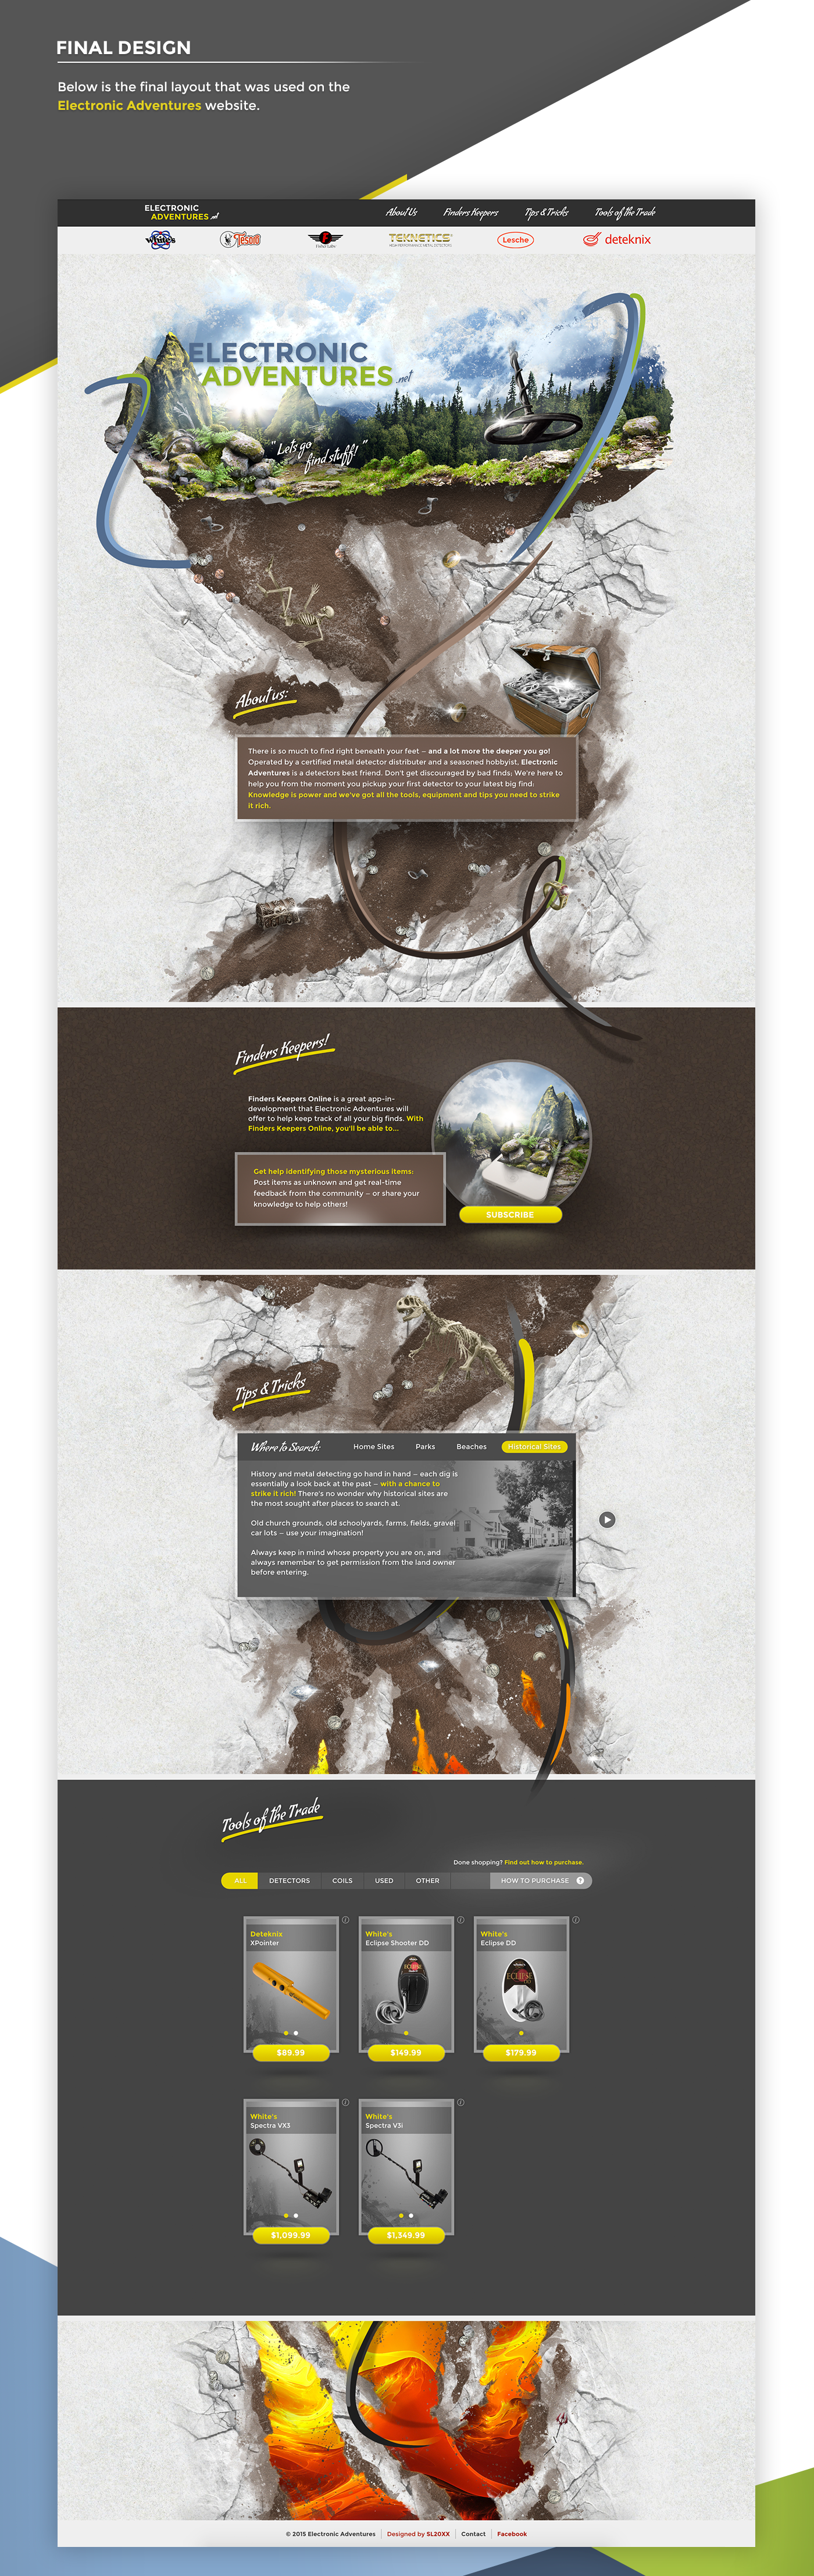 Website design photomanipulation photoshop metal detecting Layout creative underground concept shop